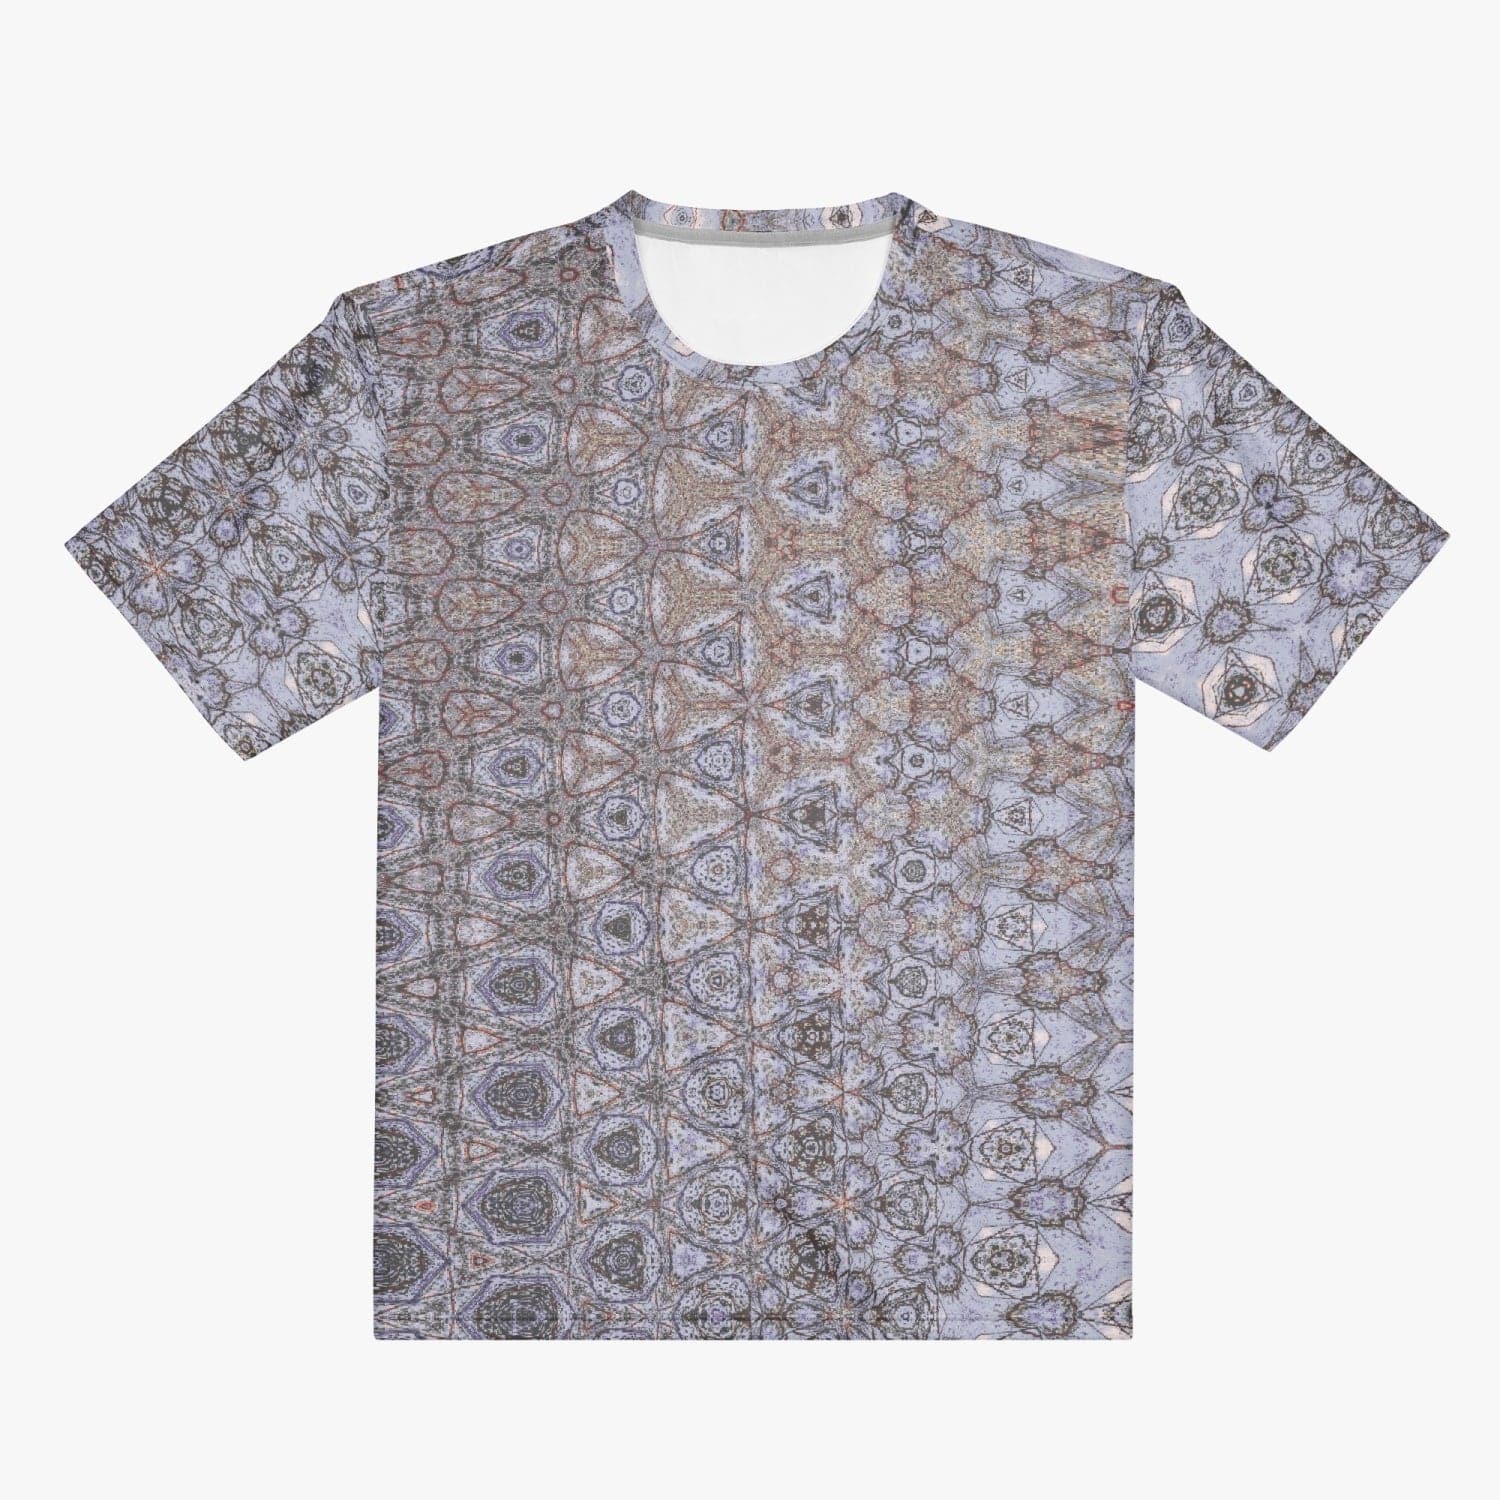 Purple Grey Sophisticated Active Wear Patterned Handmade T-shirt for Men by Sensus Studio Design